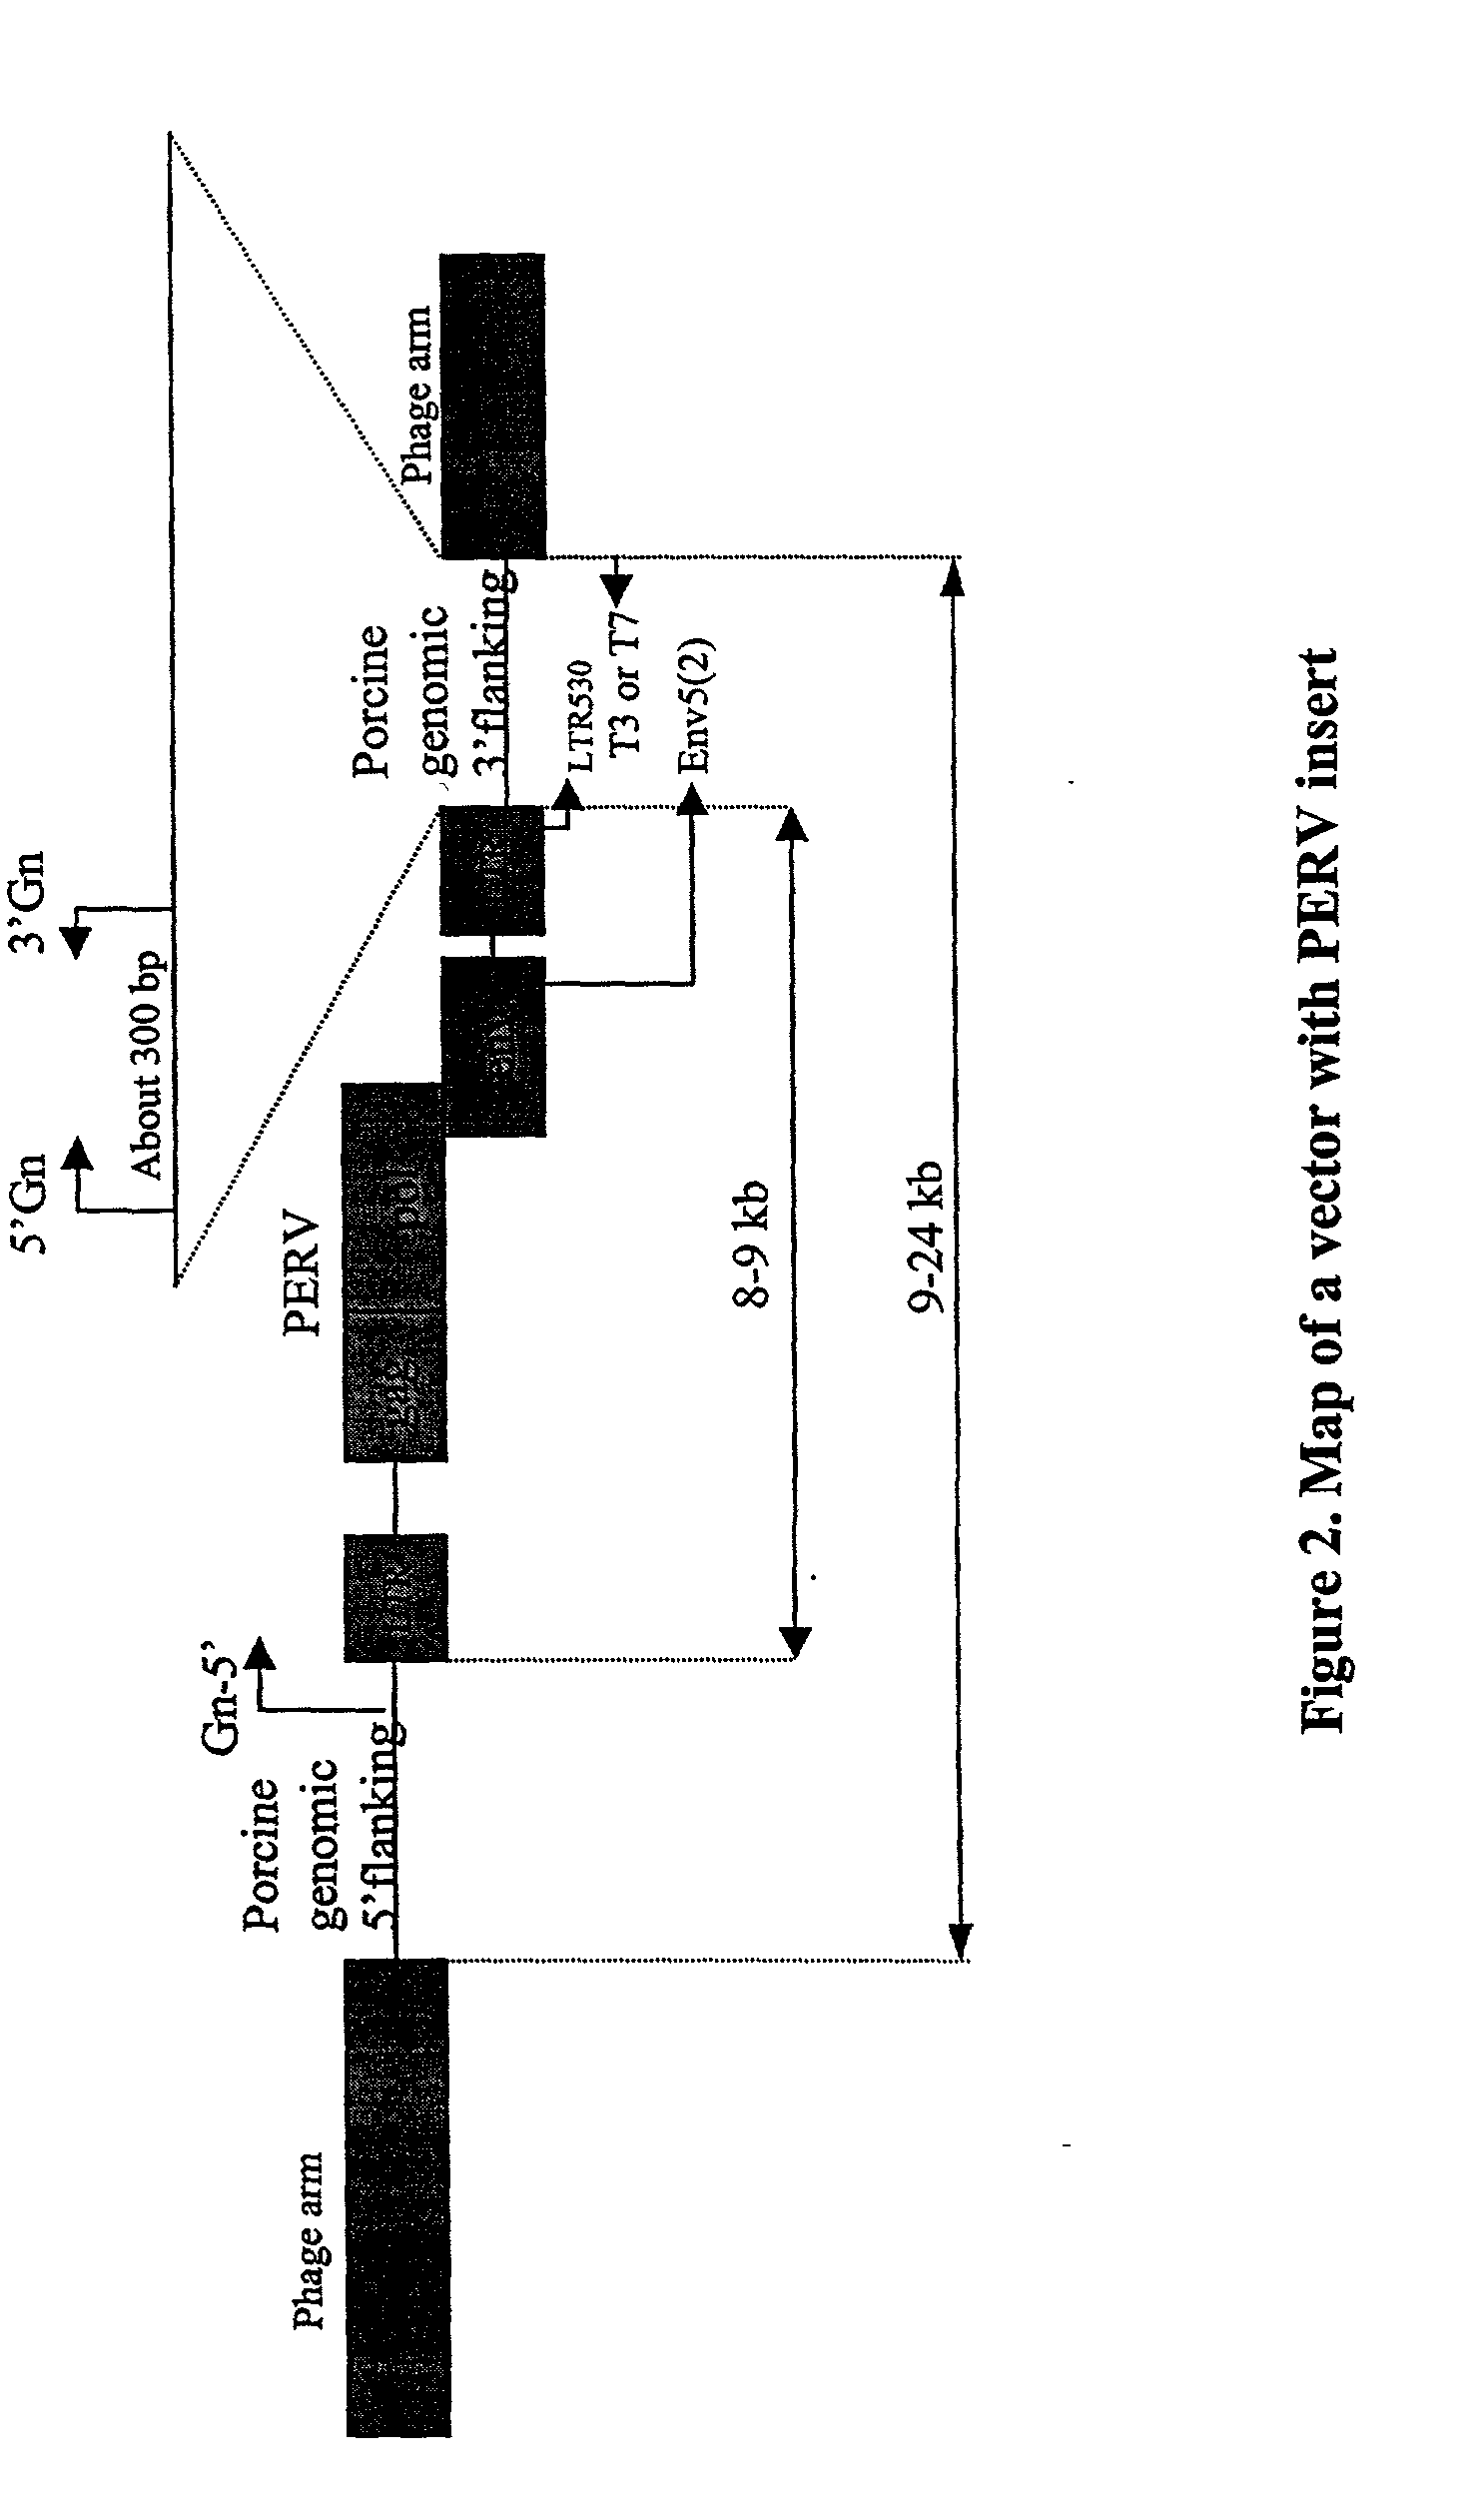 Elimination of endogenous porcine retrovirus